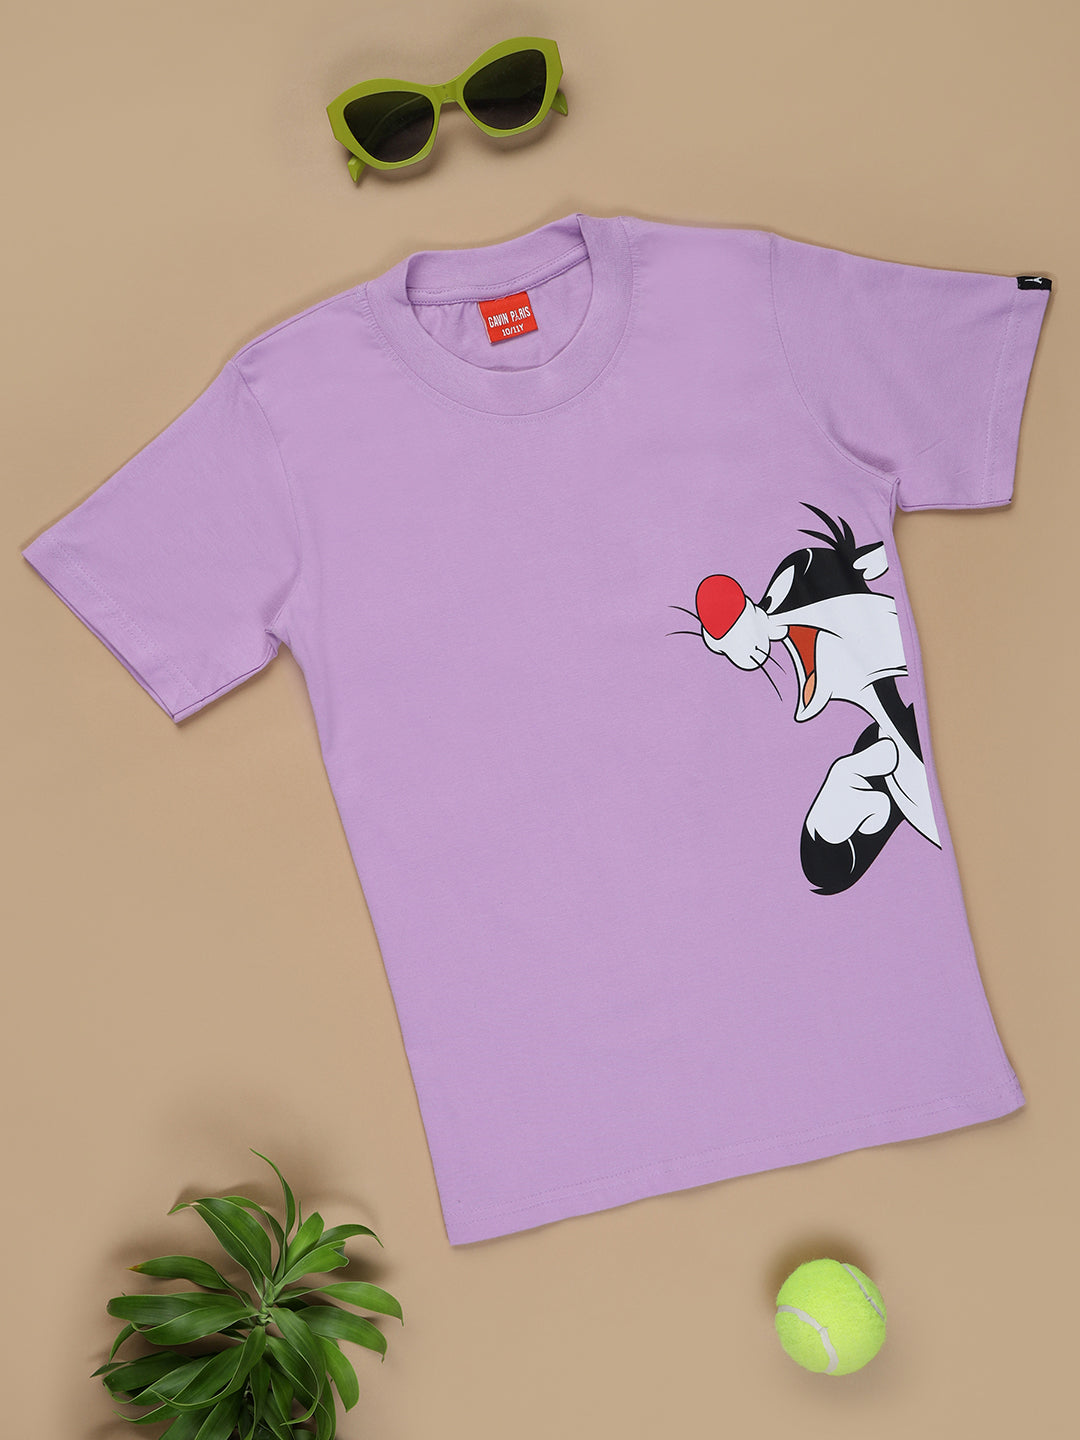 Side Sylvester T-shirts for Boys & Girls